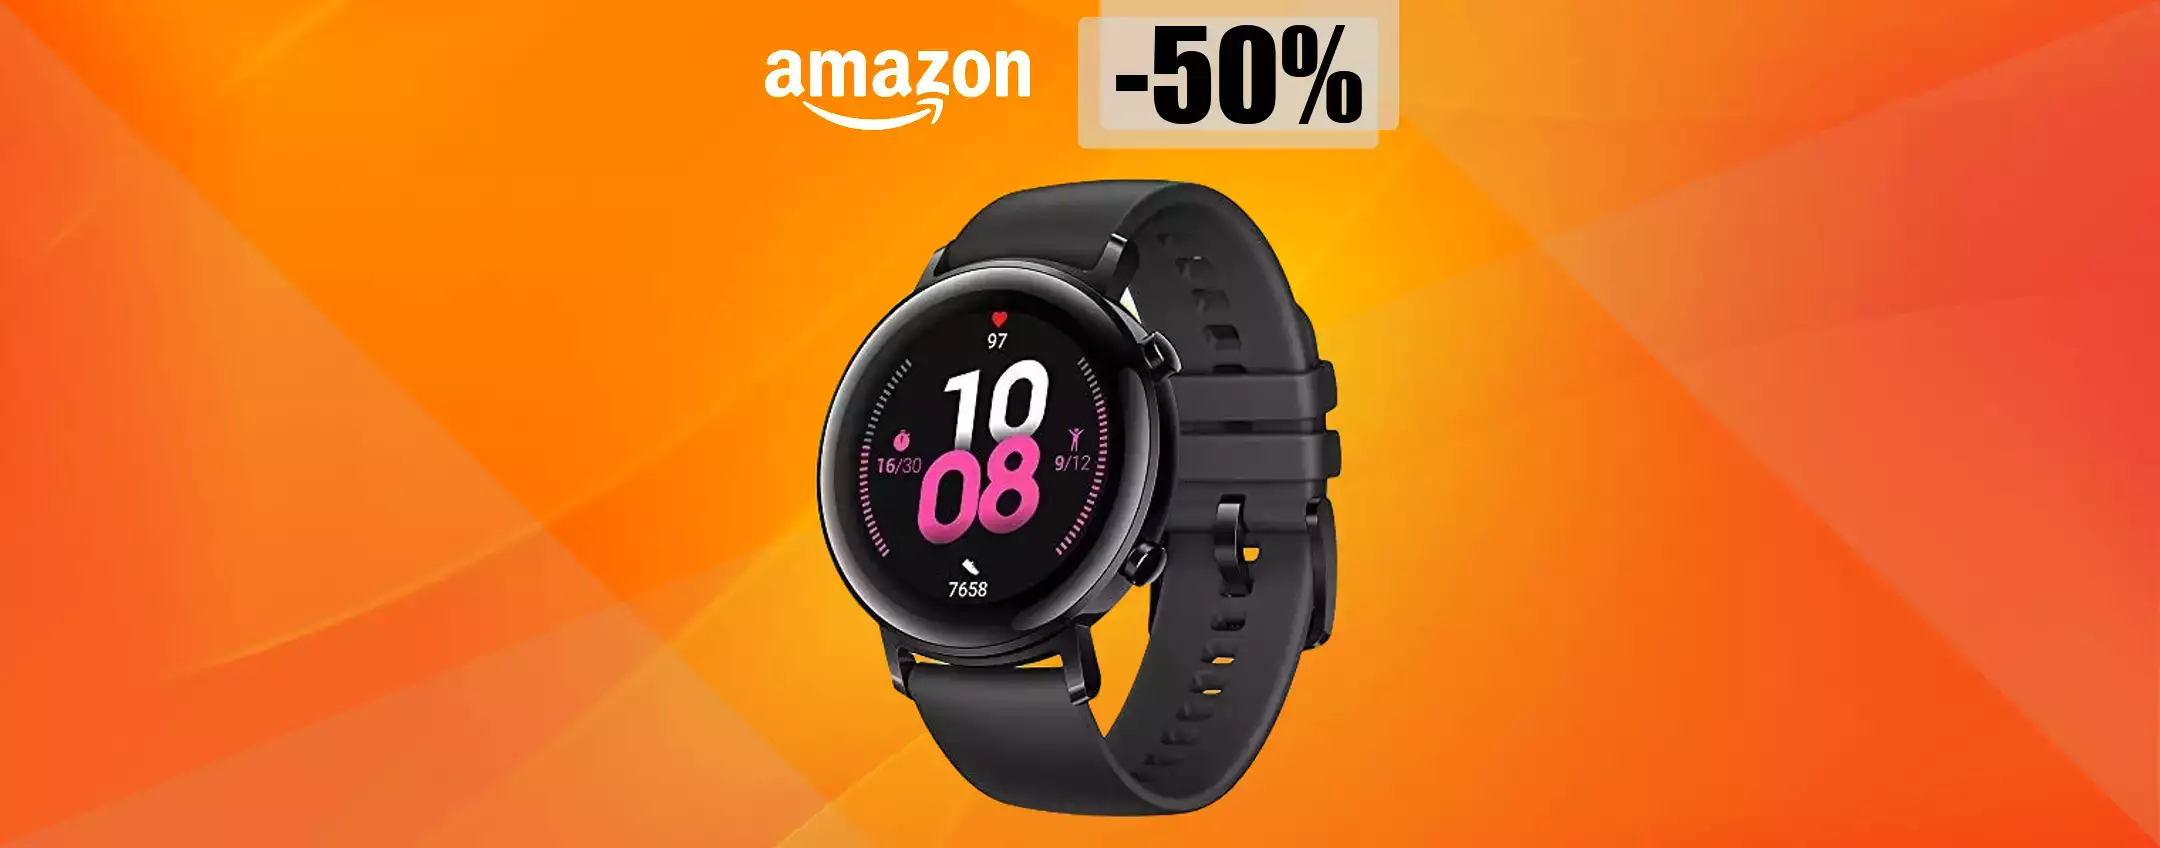 Huawei Watch GT 2 a METÀ PREZZO su Amazon: ti bastano 99 euro